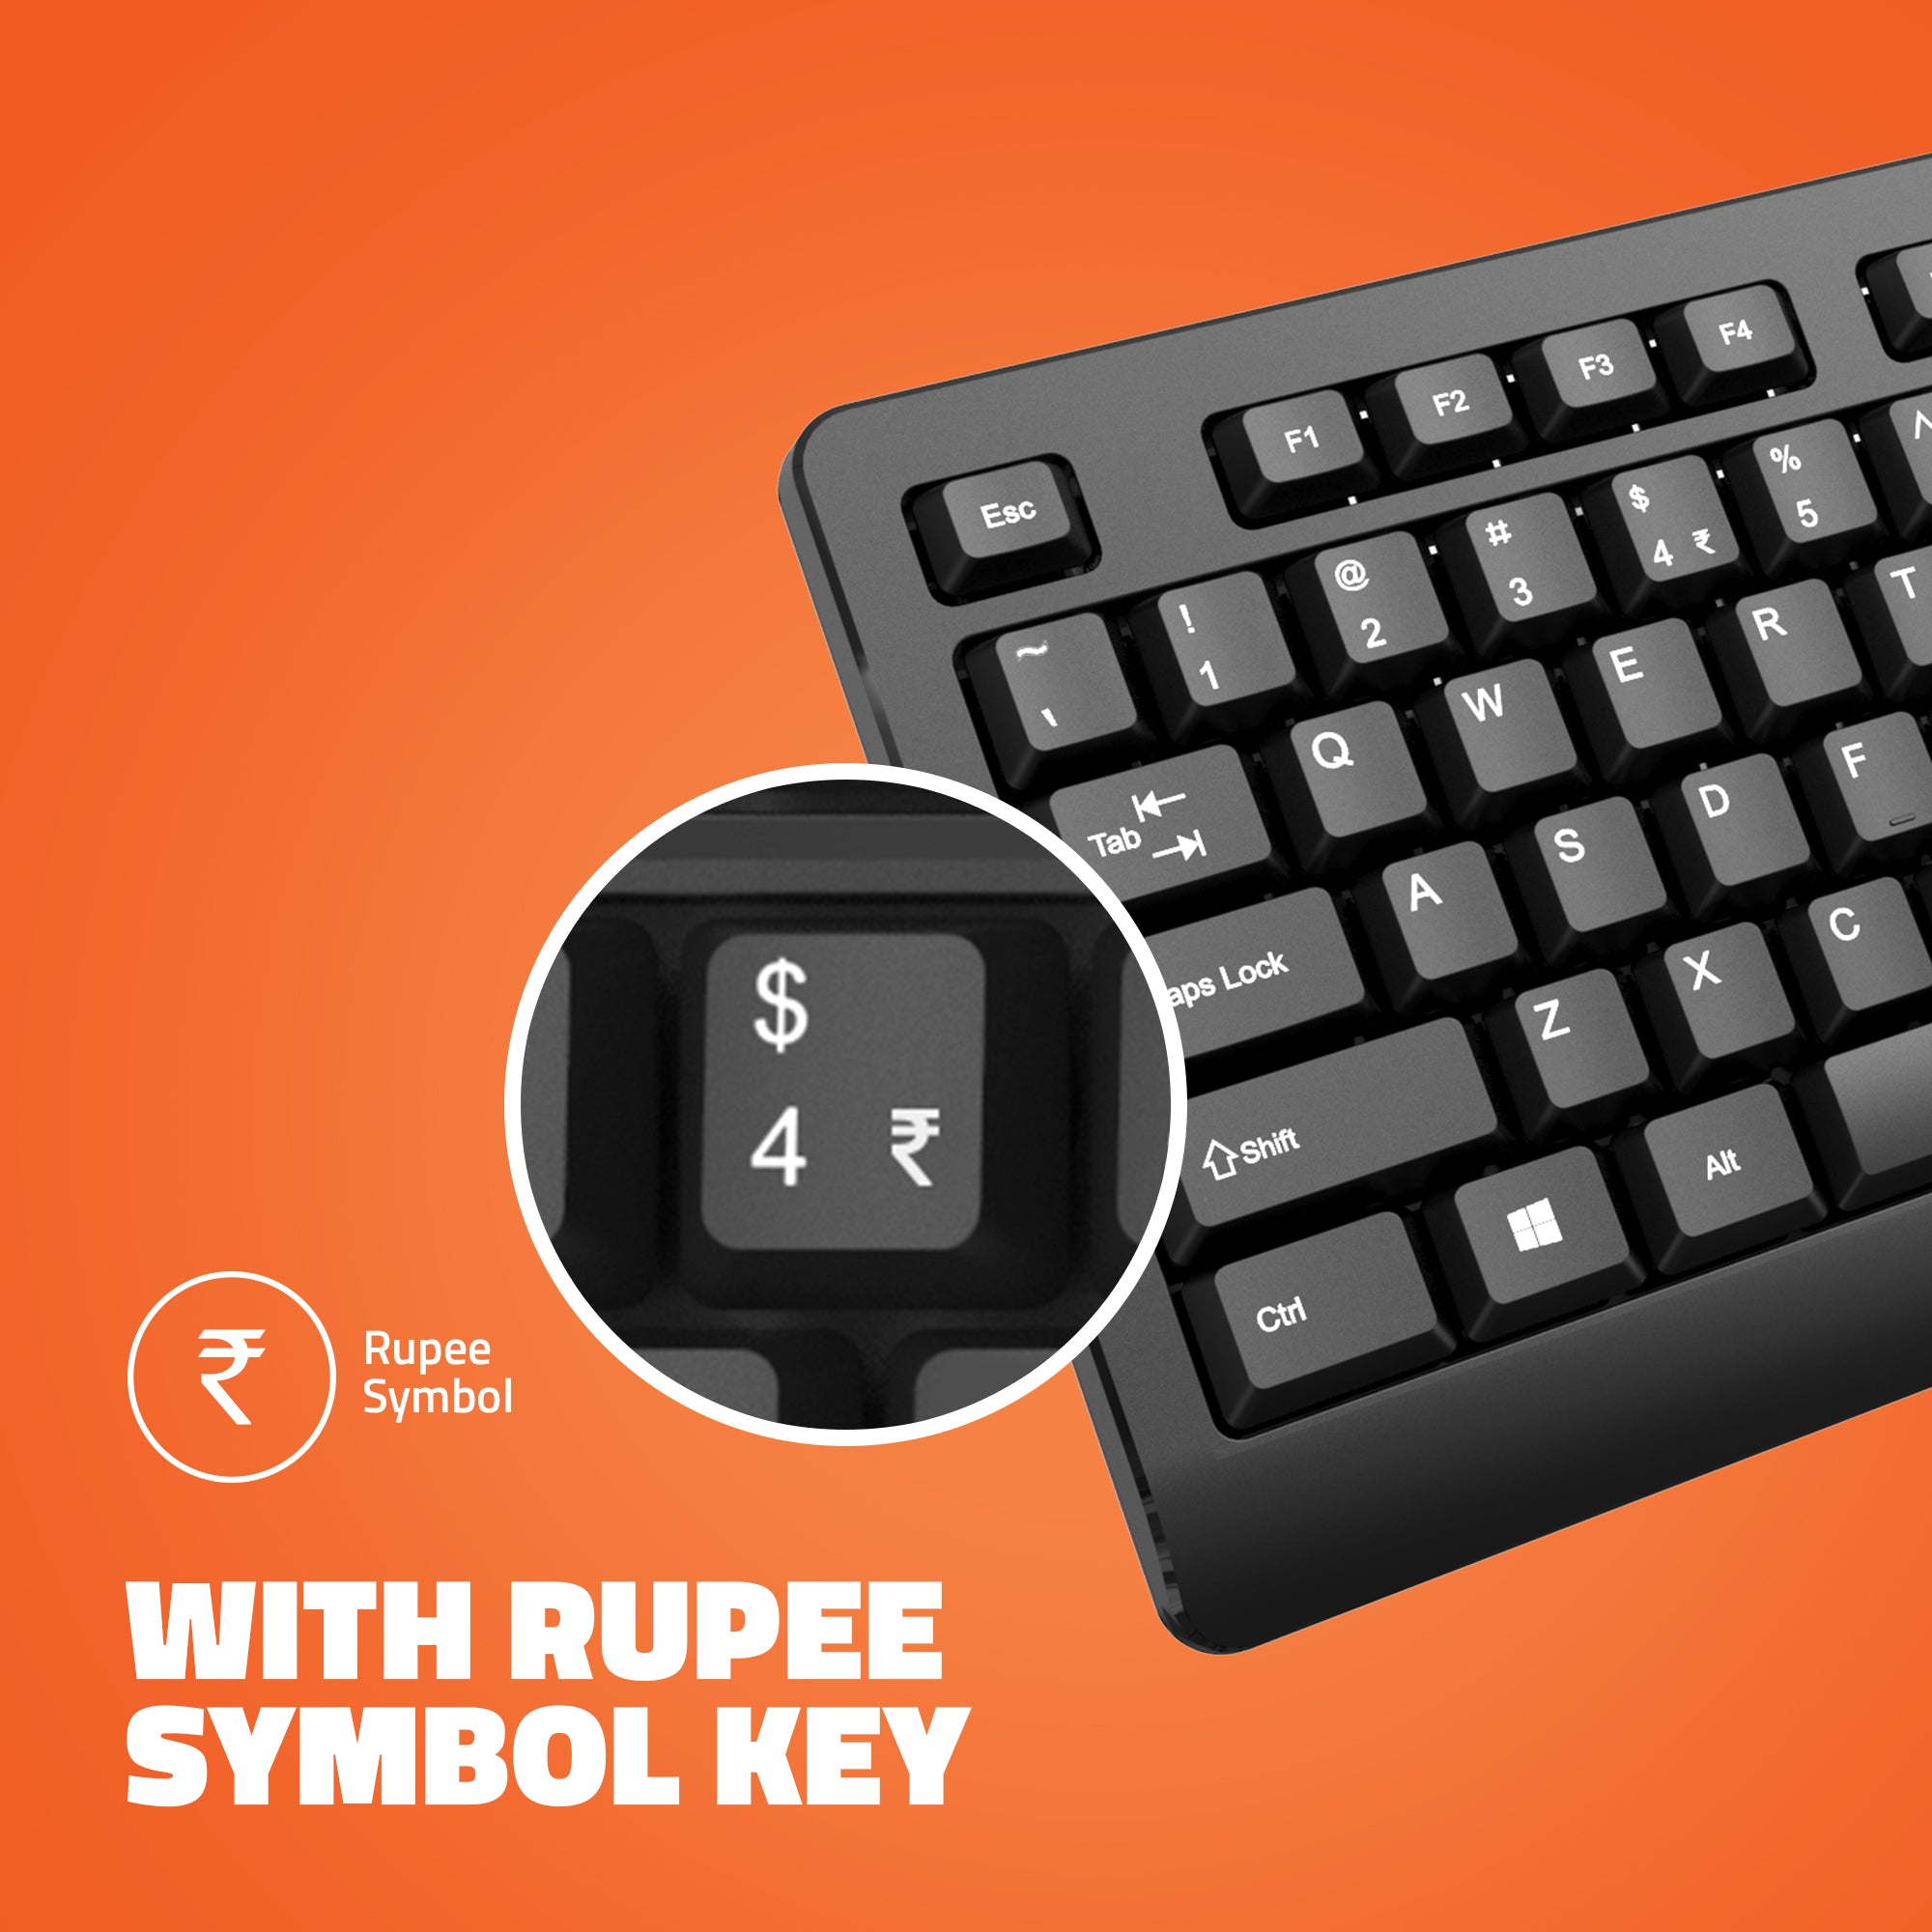 WorkPro 20 USB Keyboard & Mouse Combo( Black)